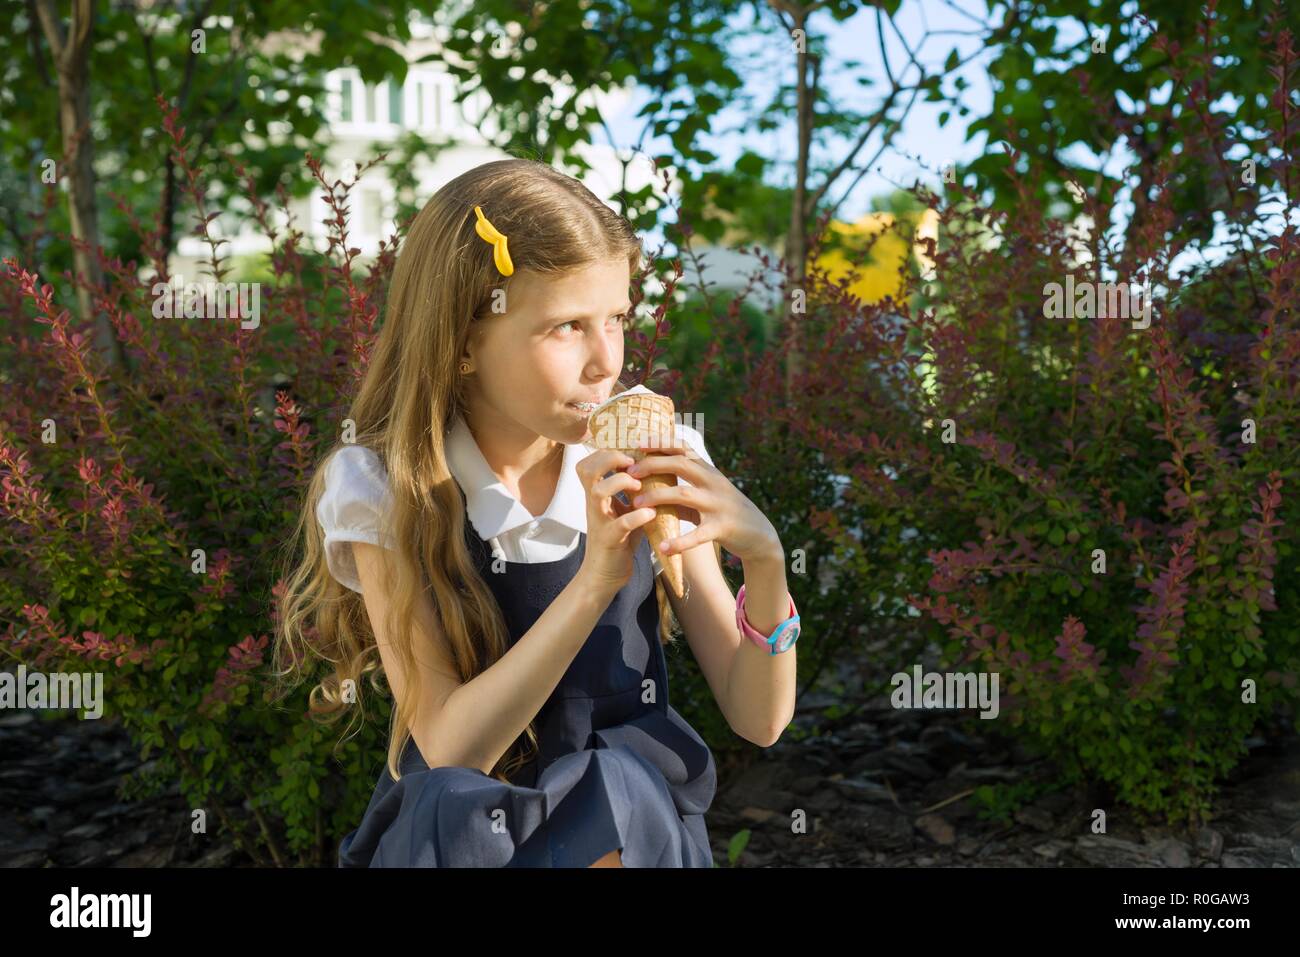 Schoolgirl 8 years old eating ice cream. Blond girl in school uniform, background of green trees, yard. Stock Photo